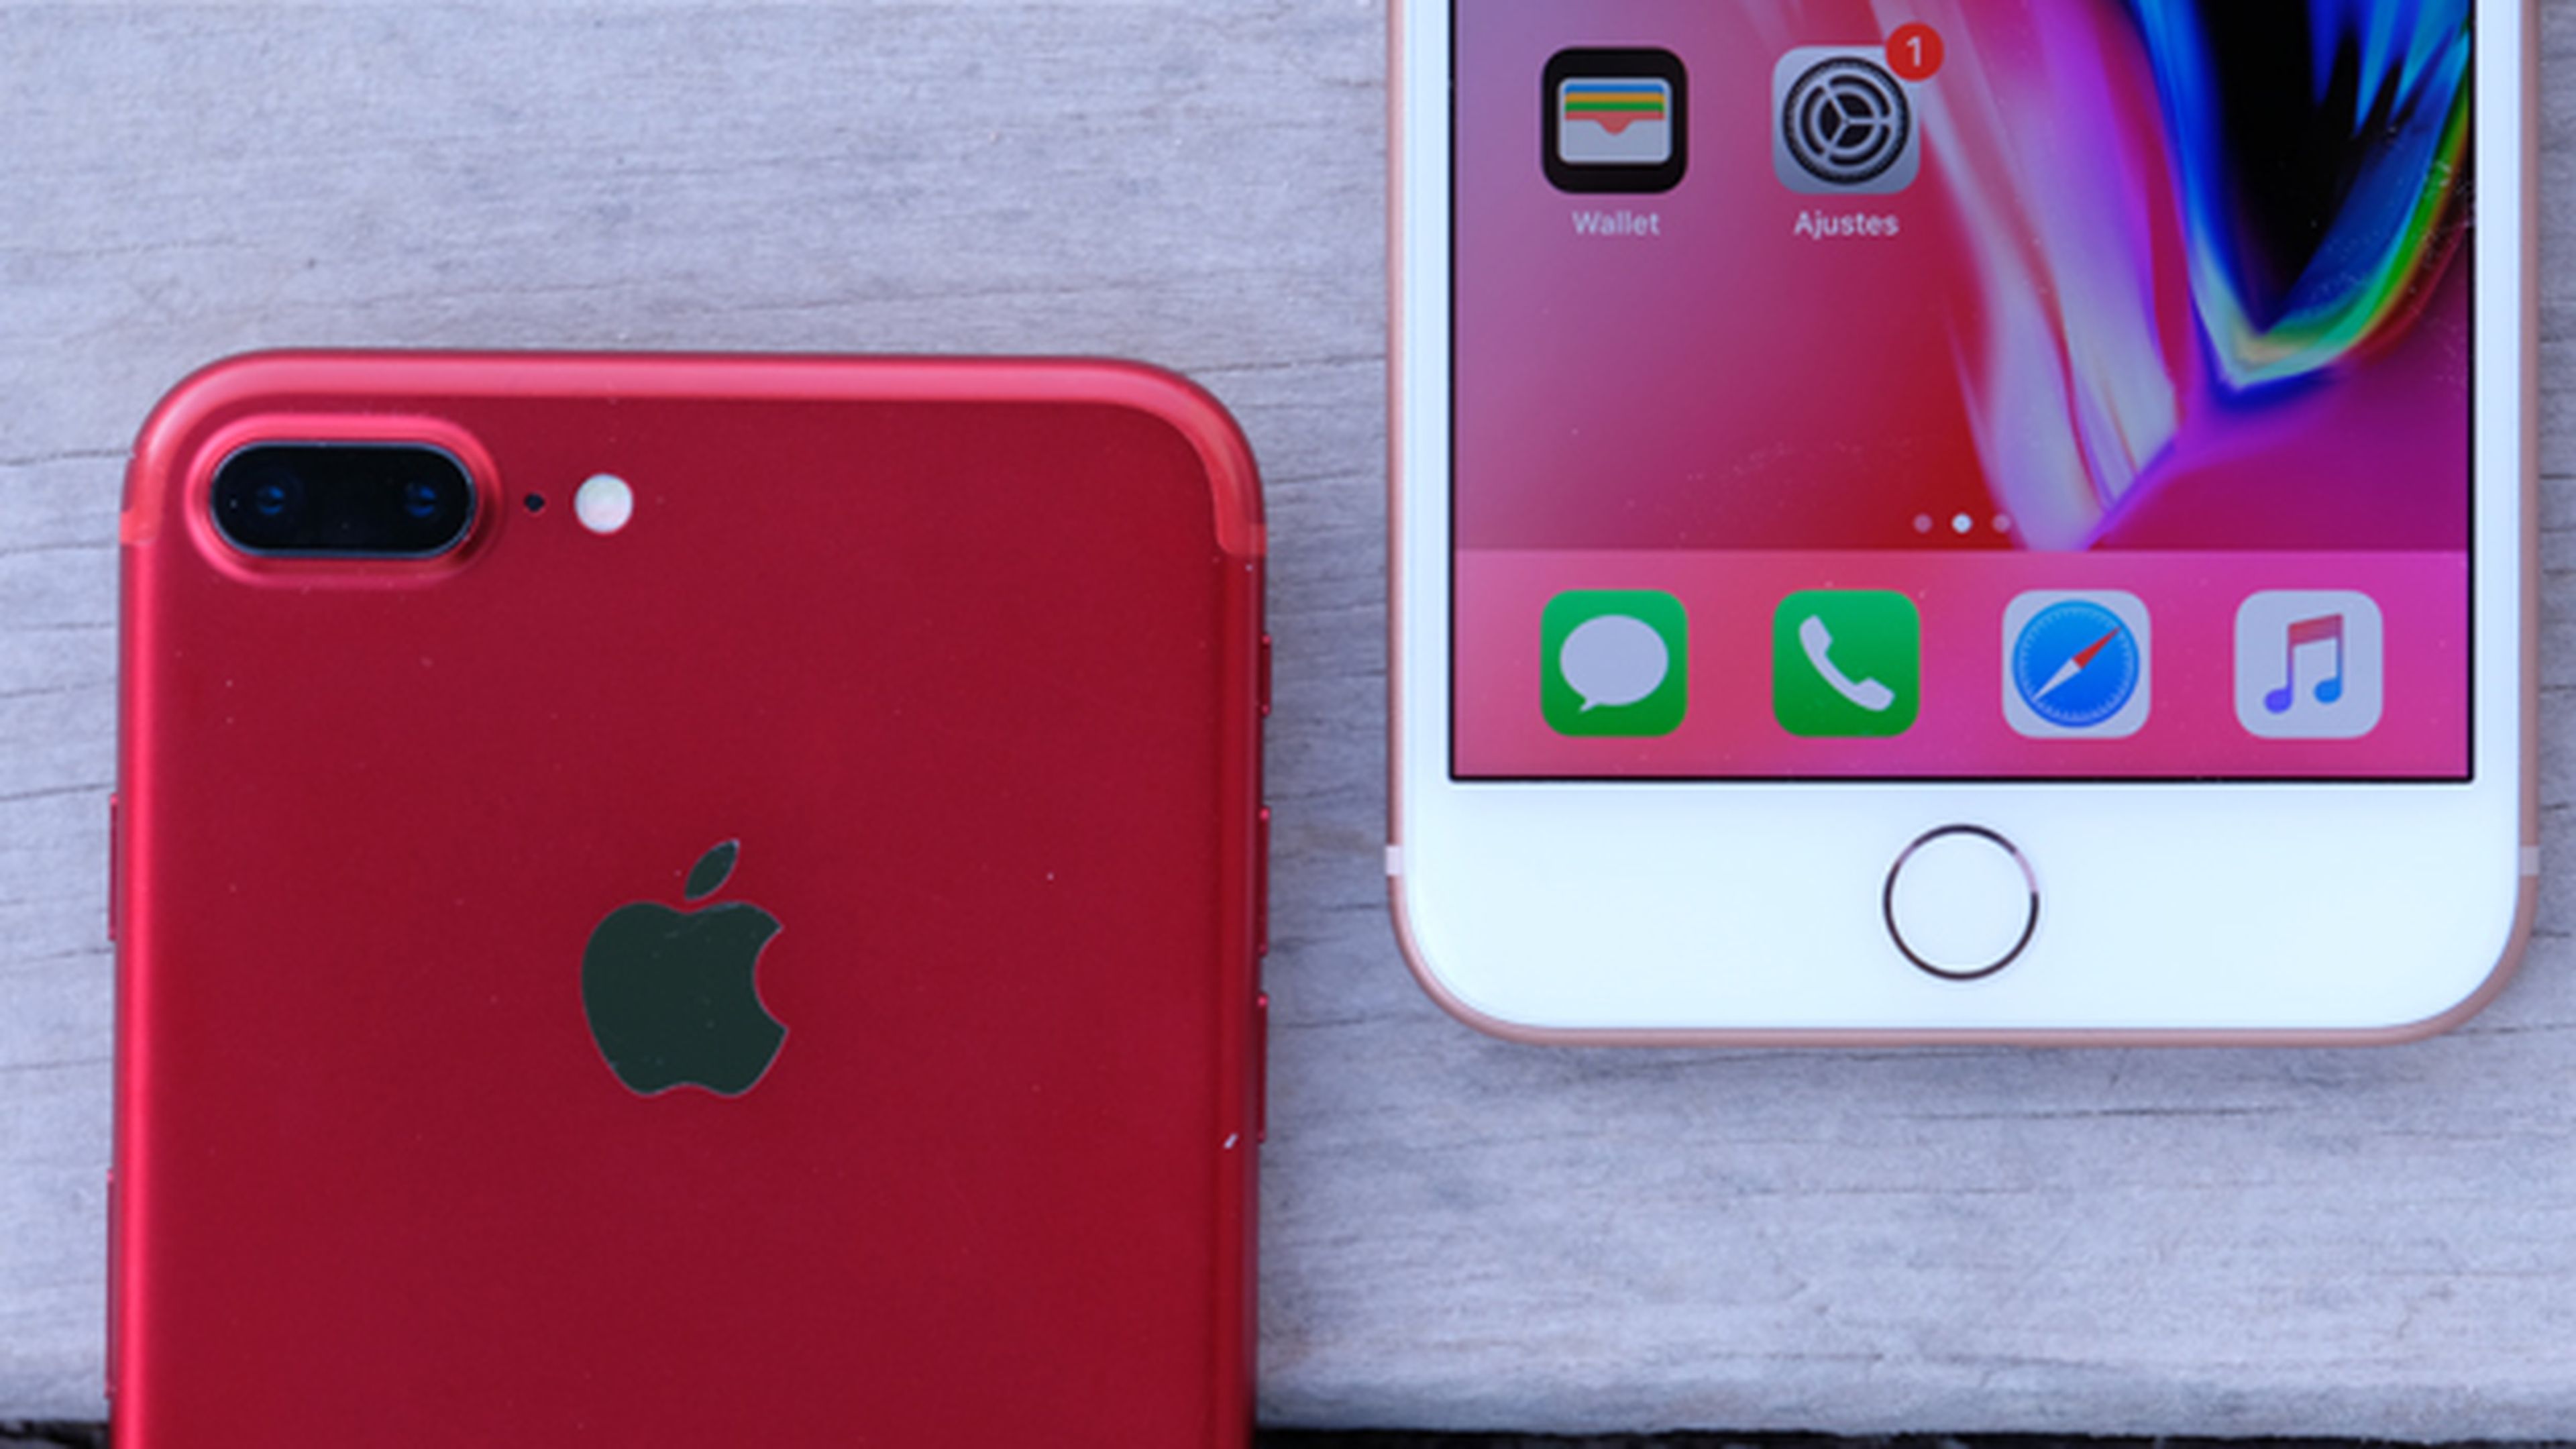 iPhone 7 Plus a la izquierda, iPhone 8 Plus a la derecha